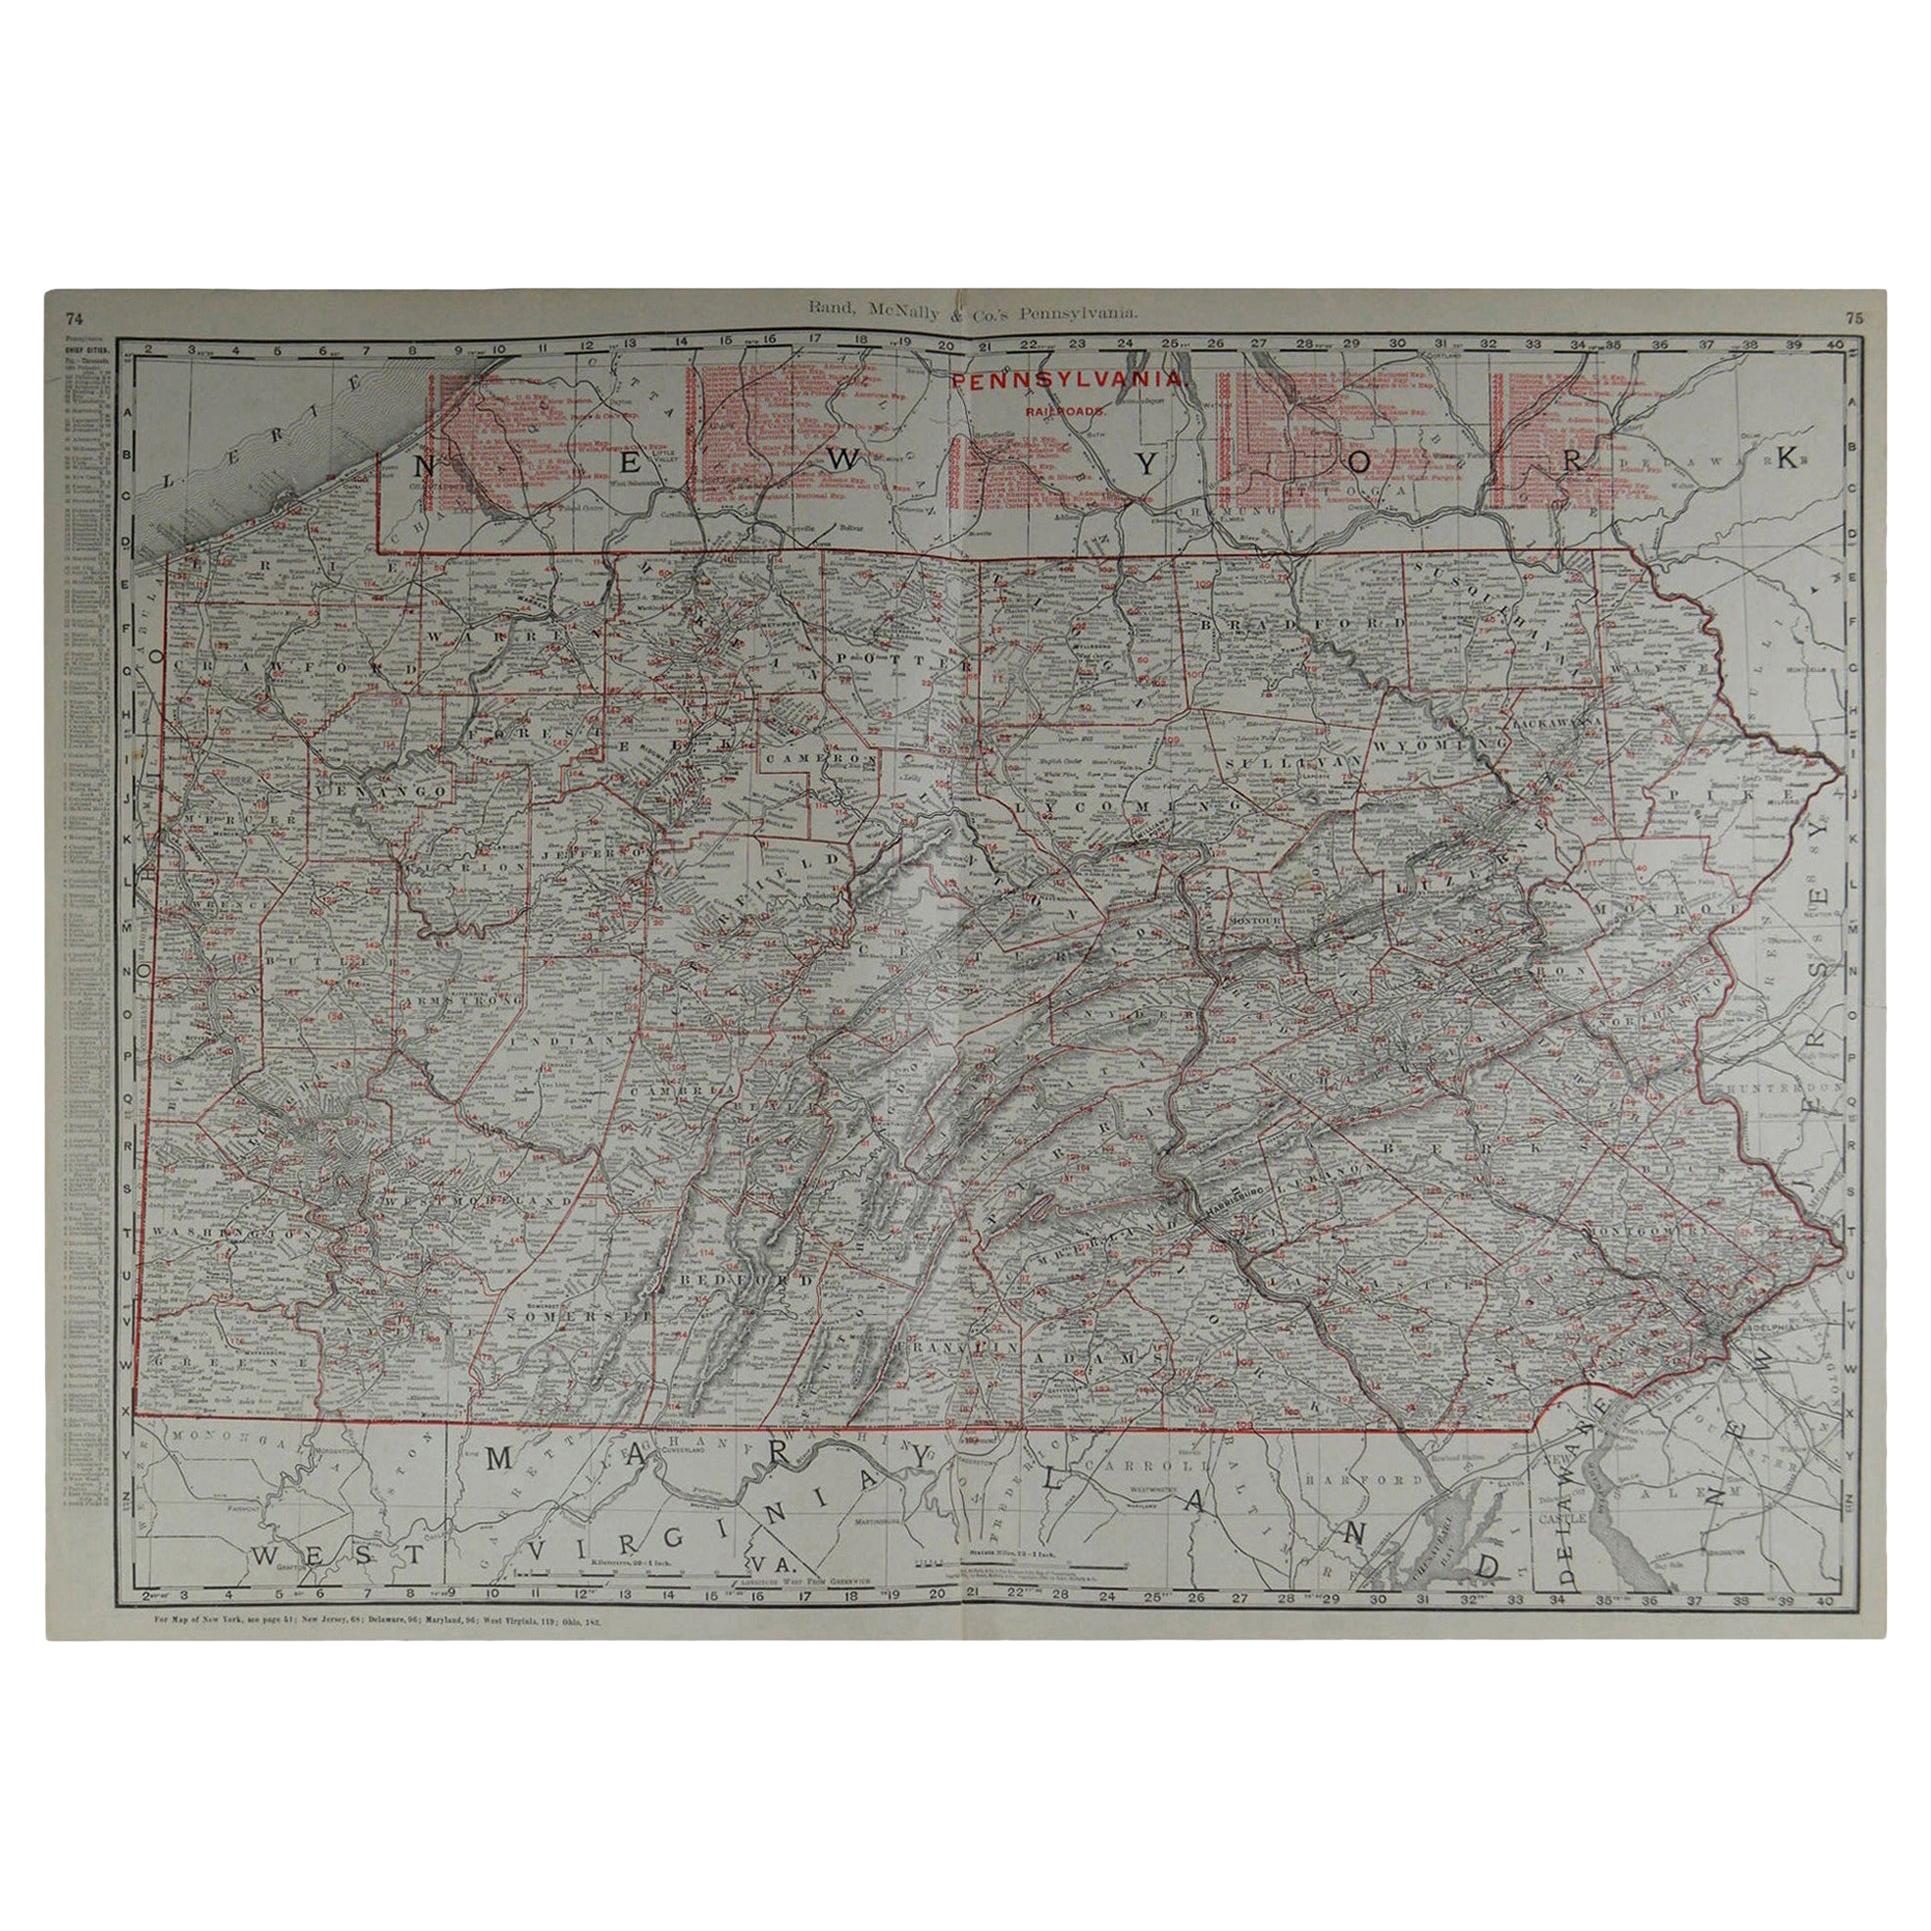 Large Original Antique Map of Pennsylvania by Rand McNally, circa 1900